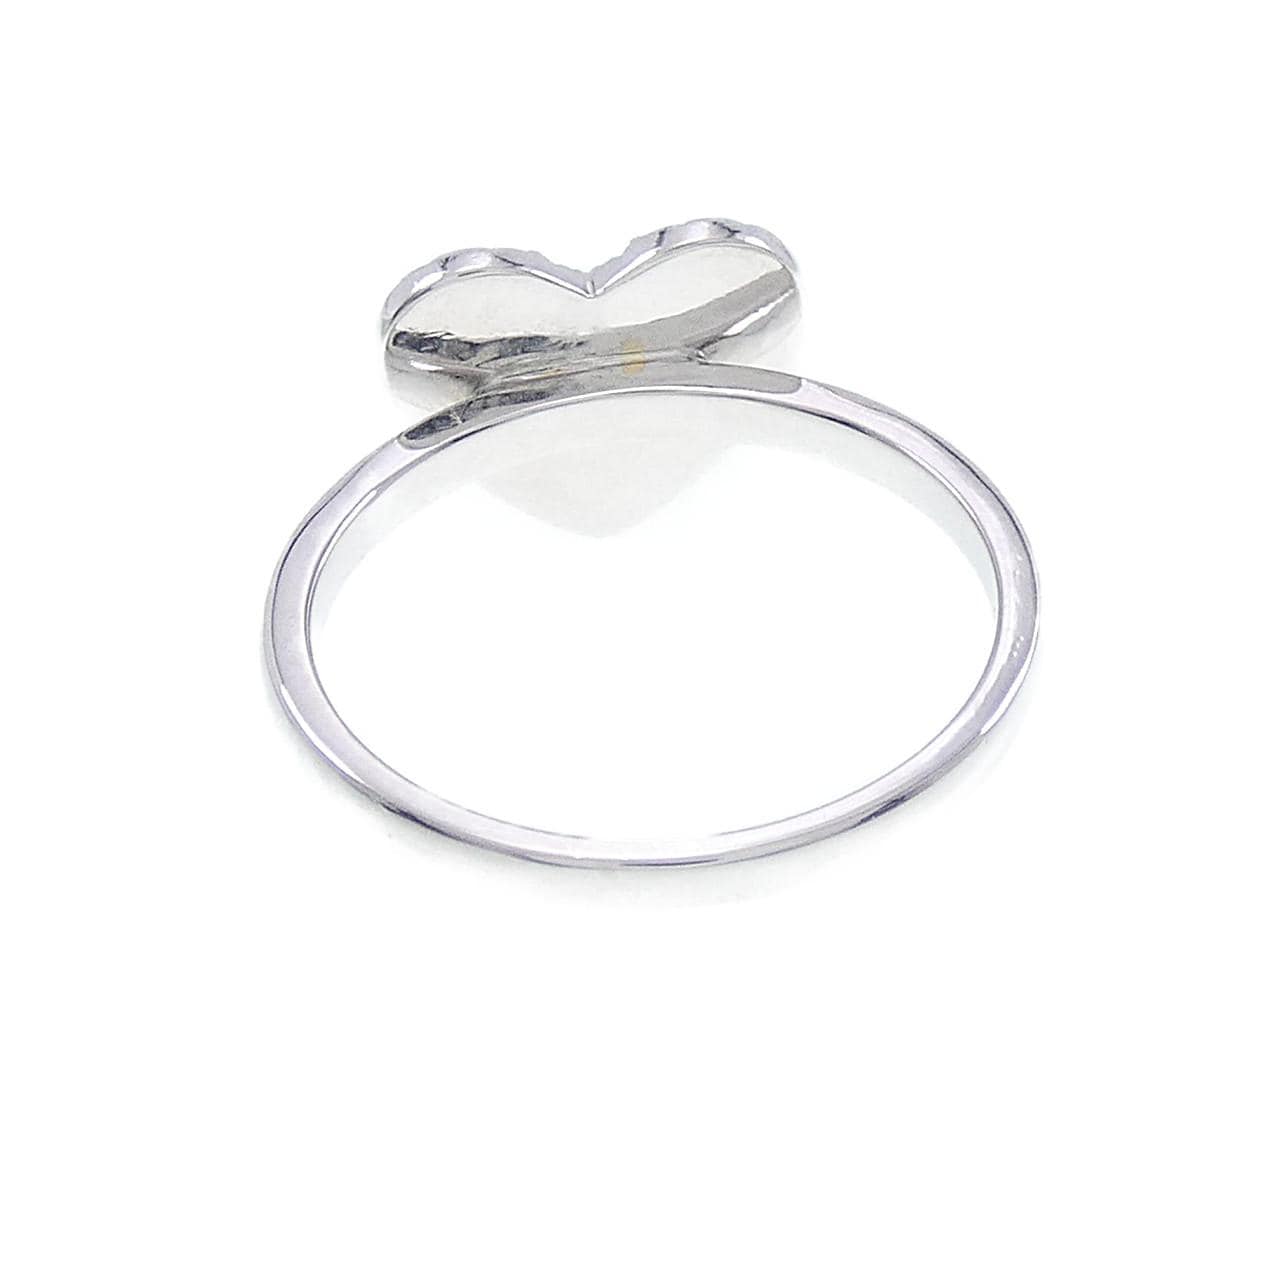 K18WG Pave Heart Diamond Ring 0.33CT